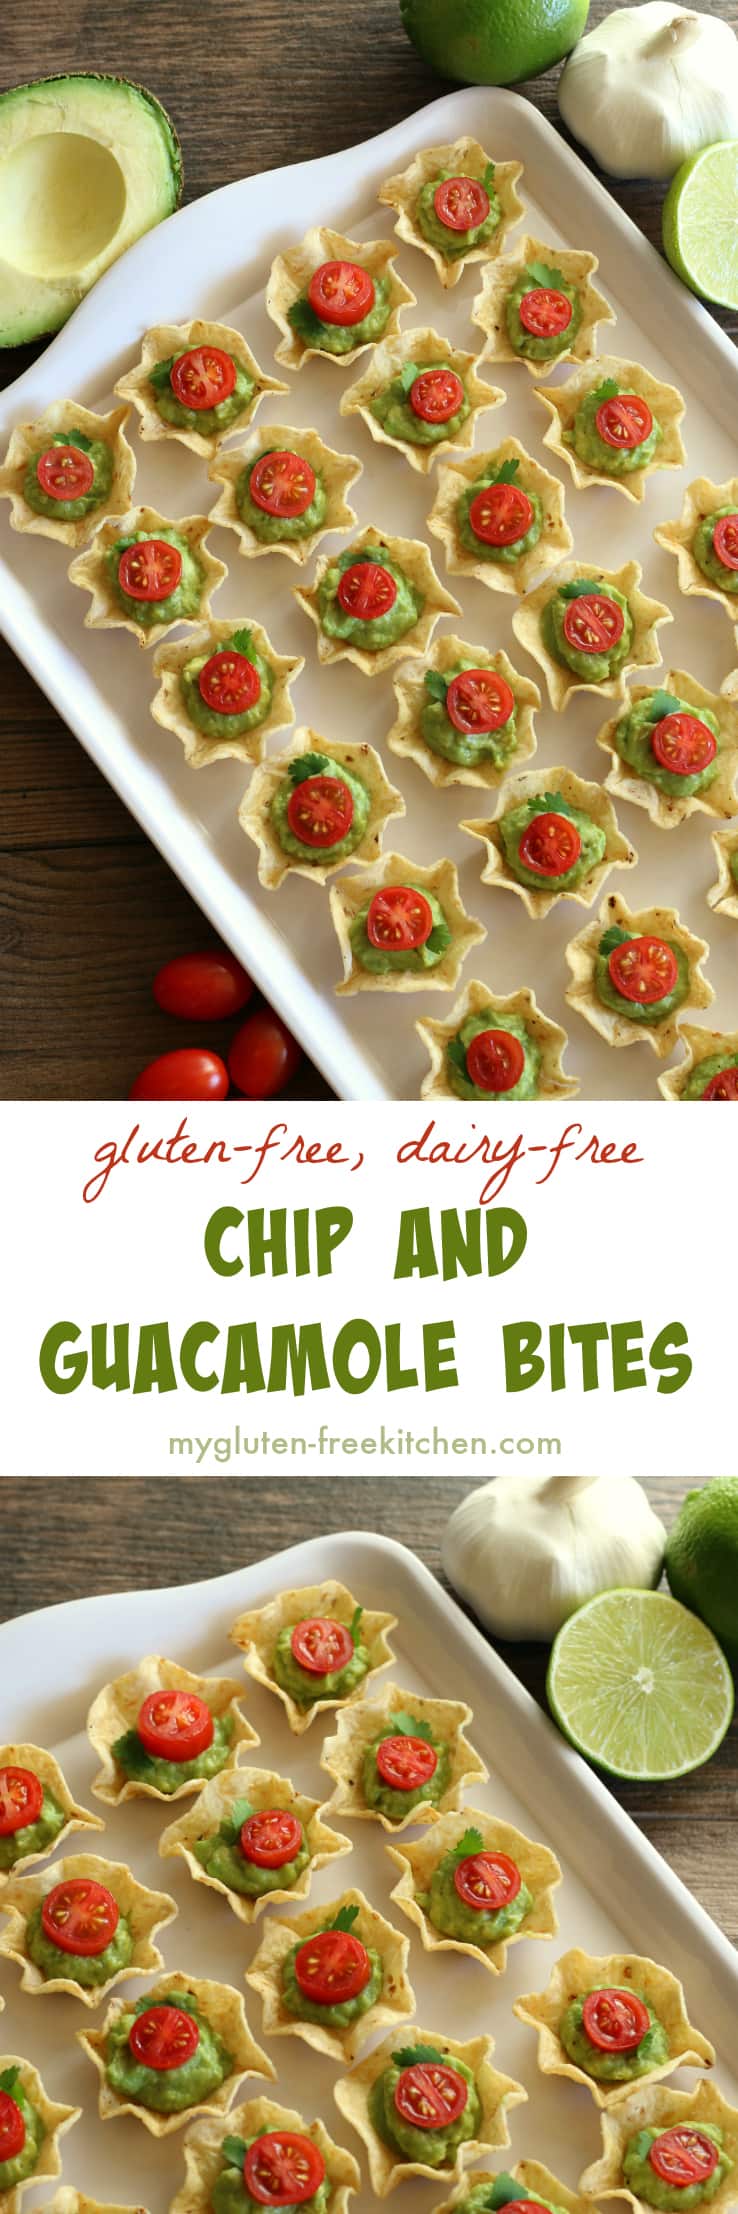 Gluten-free Chip and Guacamole Bites